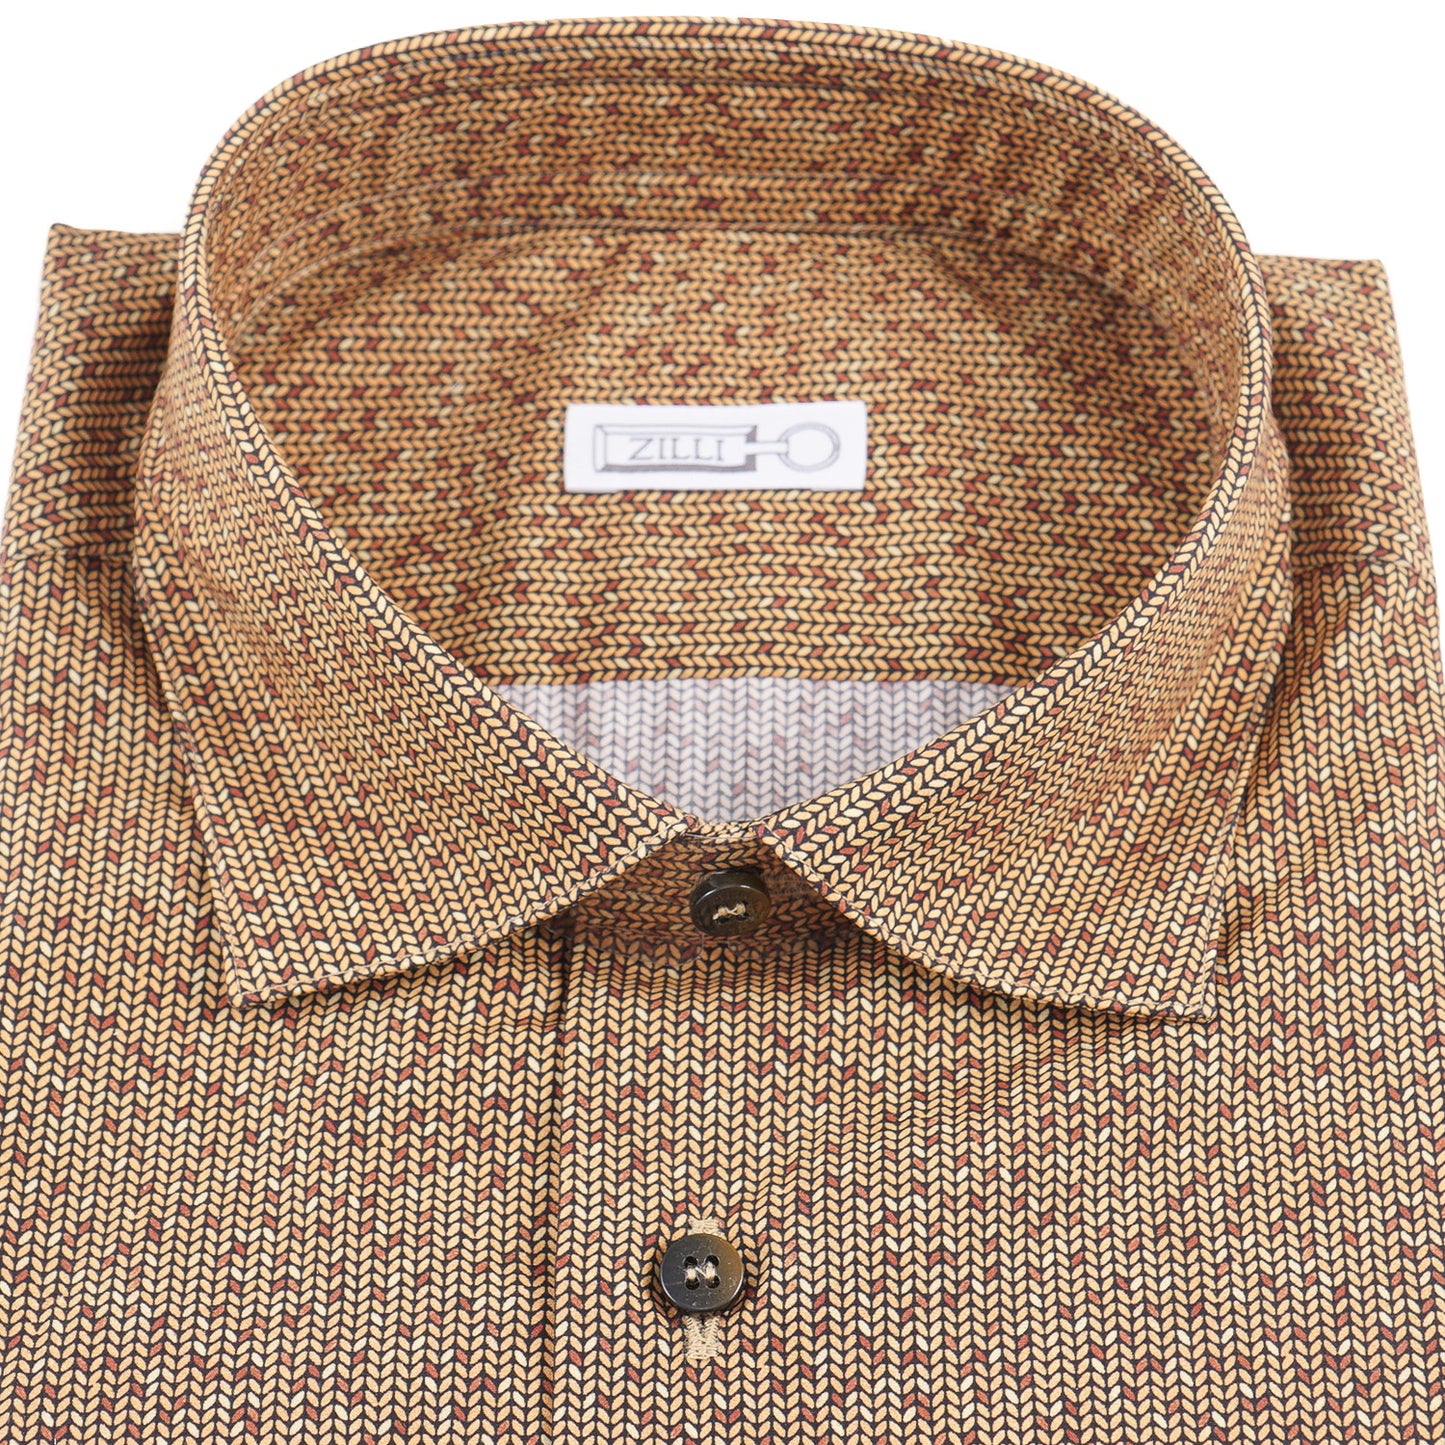 Zilli Cotton Shirt with Chevron Leaf Print - Top Shelf Apparel